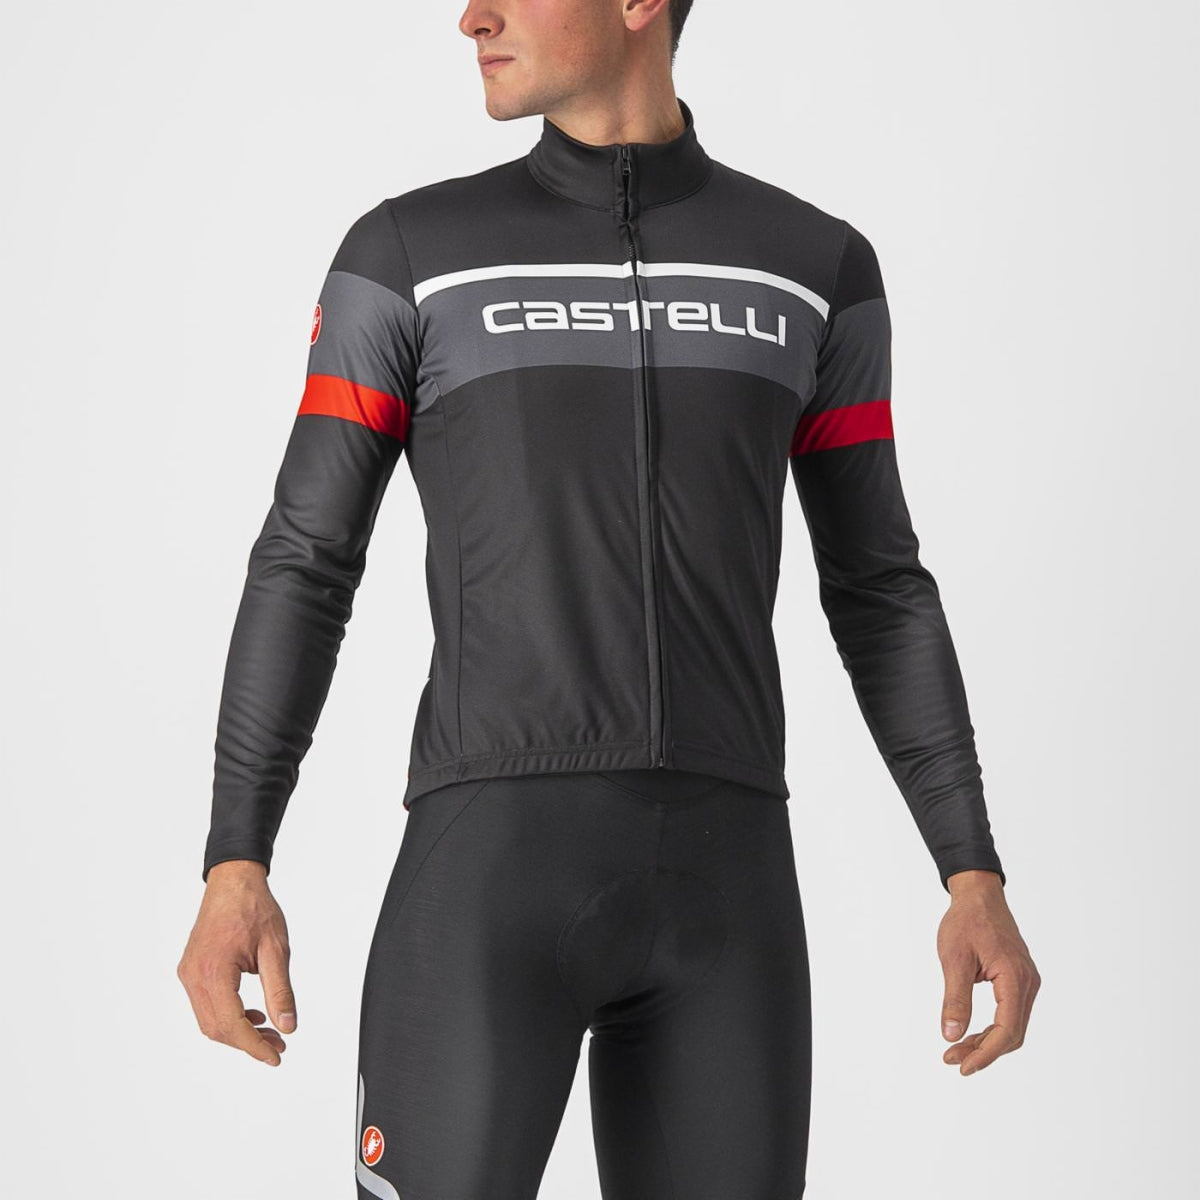 Castelli Passista jersey